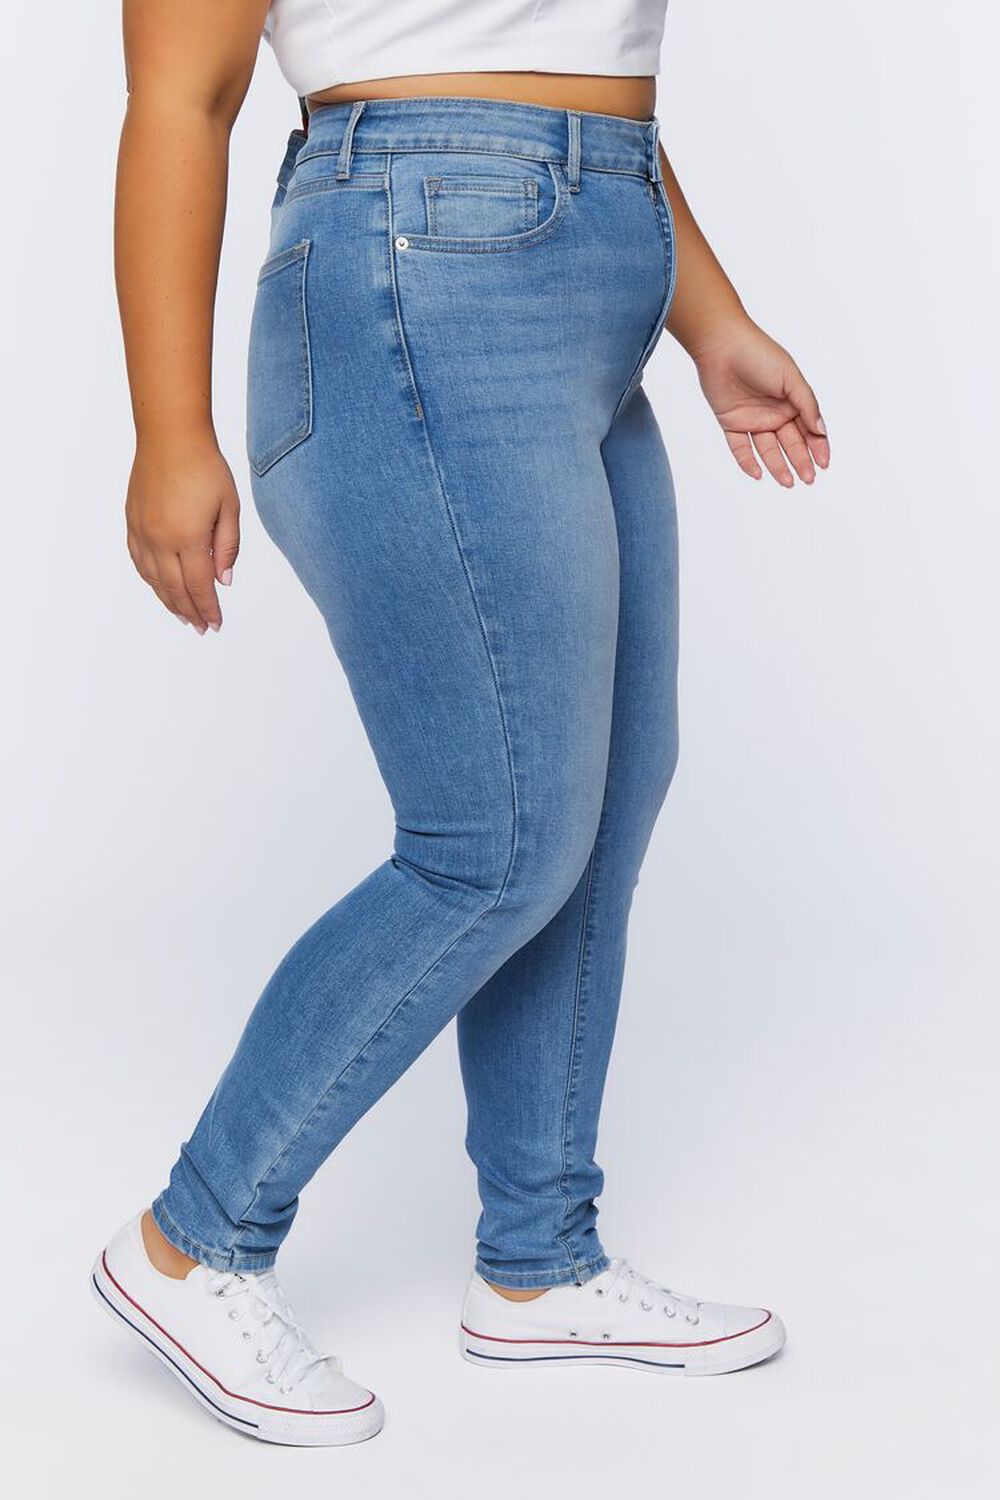 MEDIUM DENIM Plus Size Skinny High-Rise Jeans, image 3